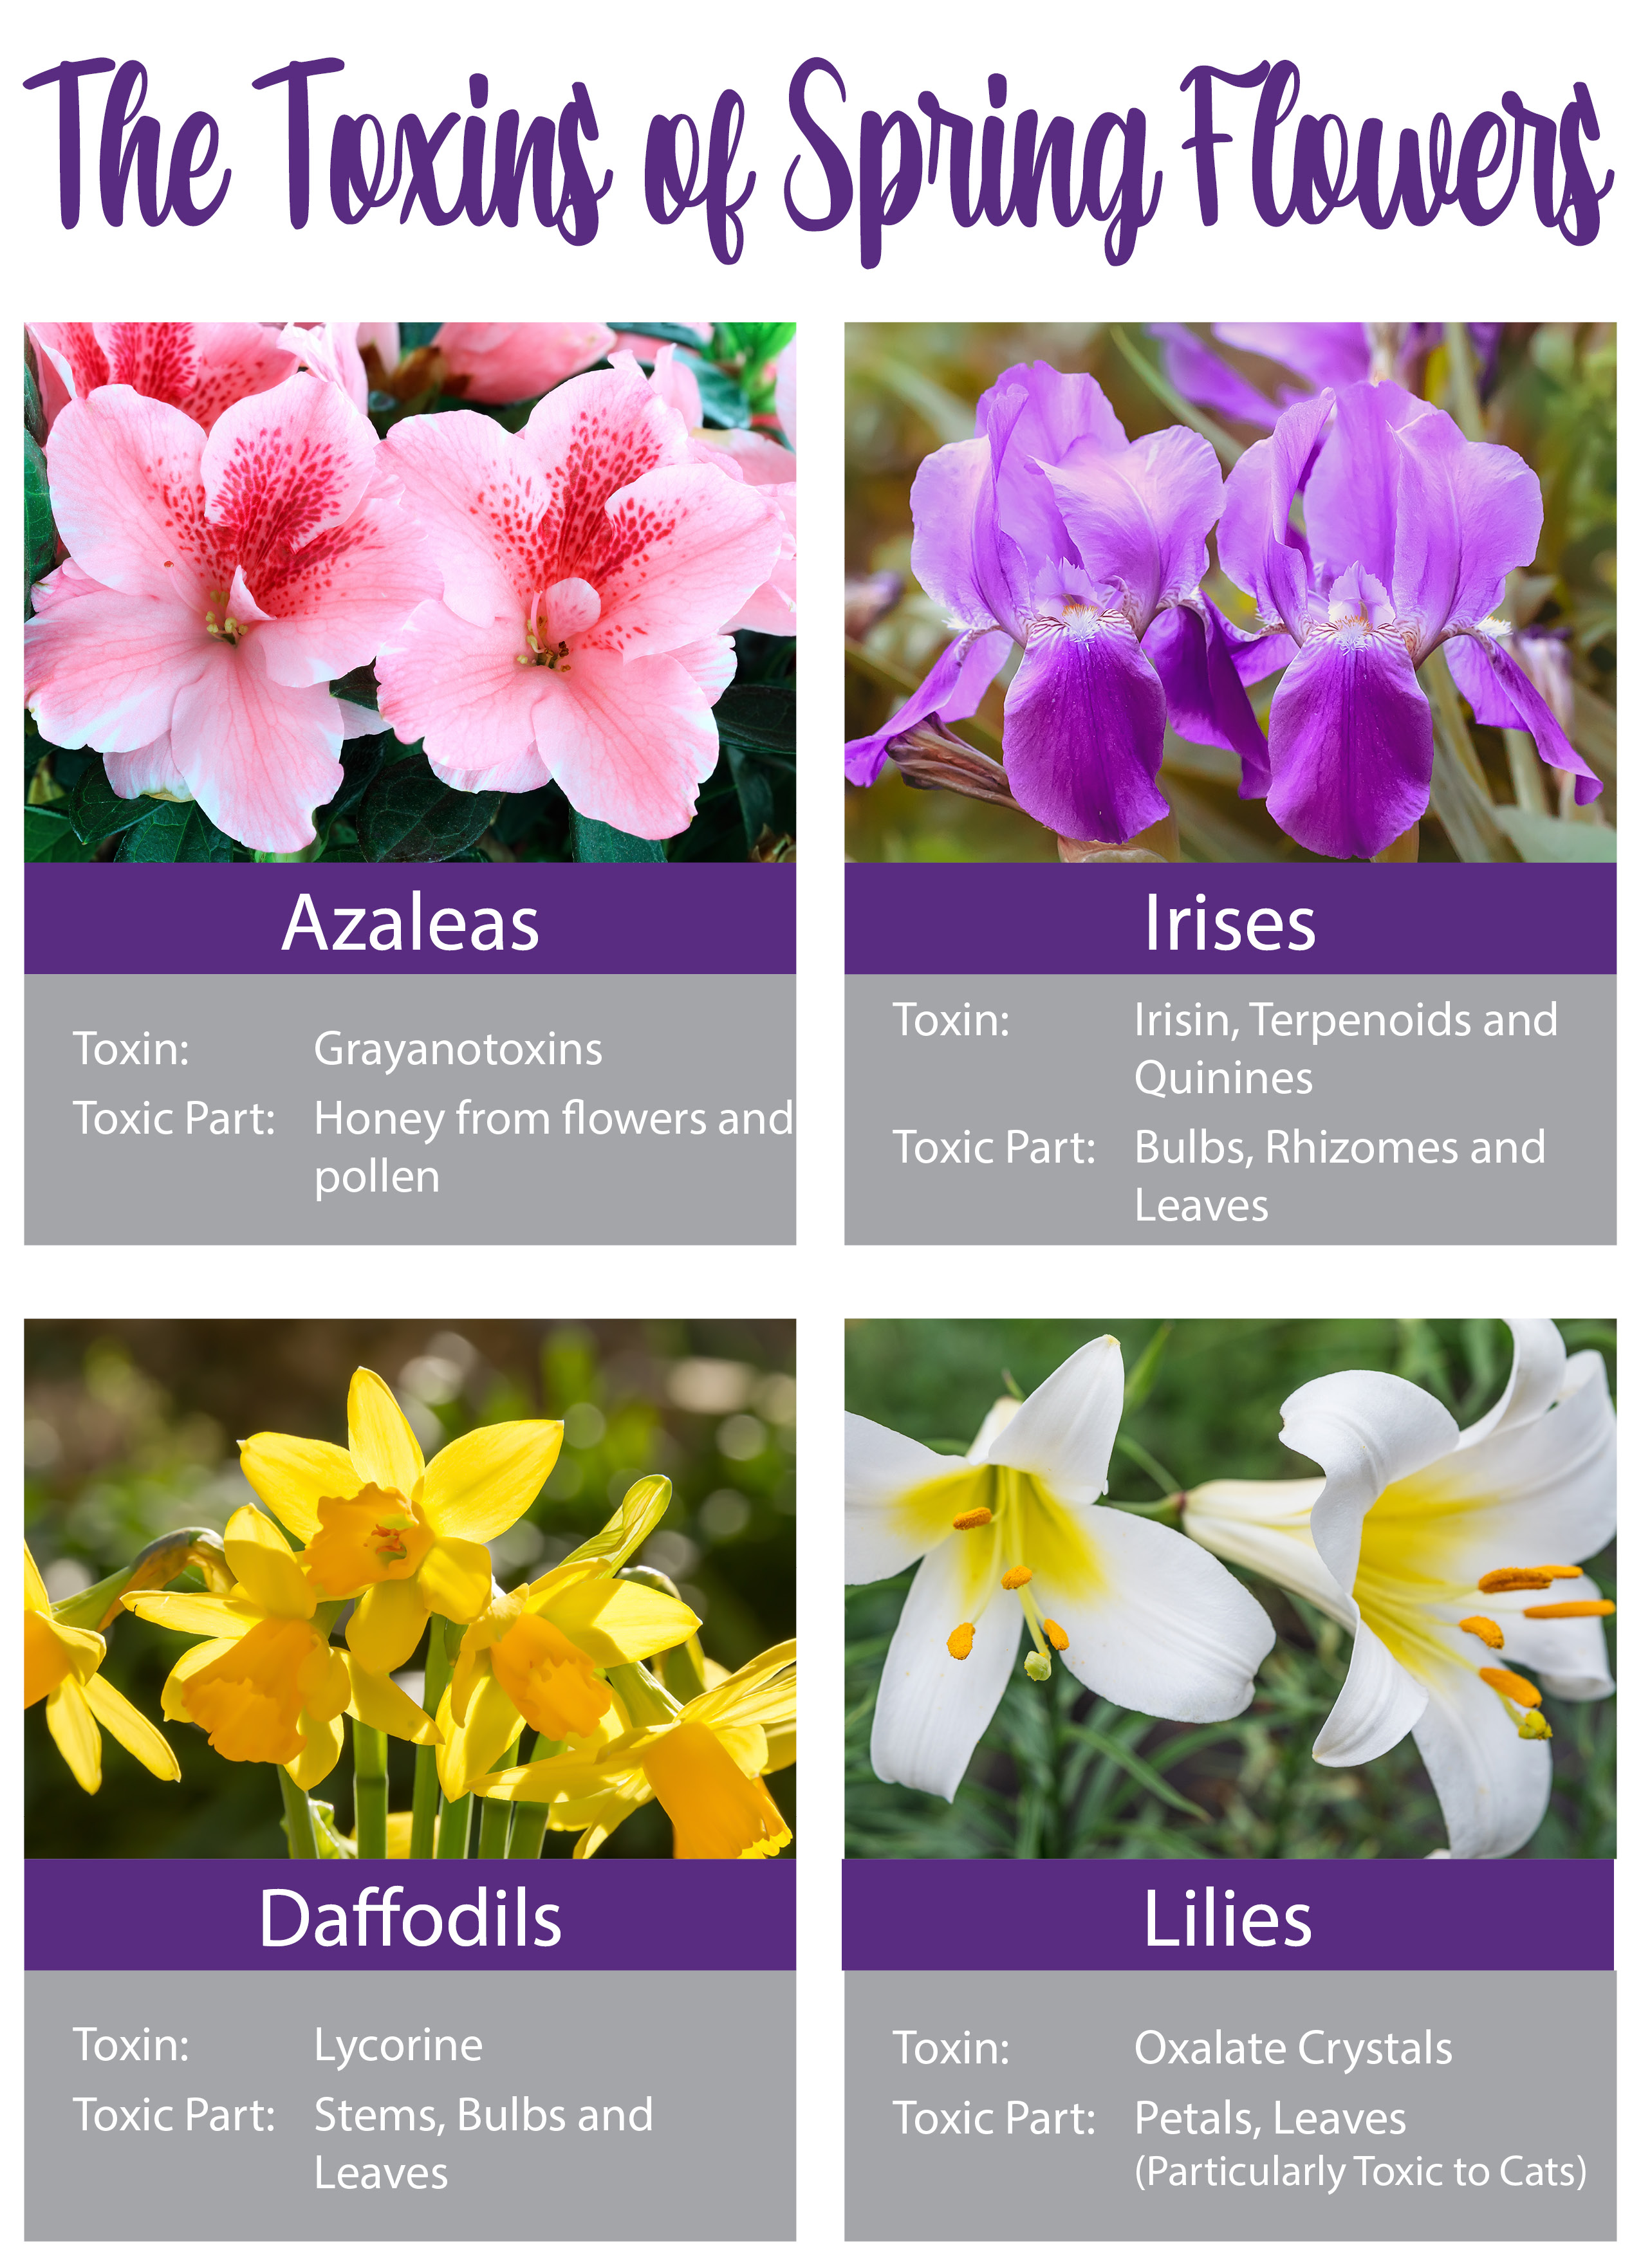 Toxins of Spring Flowers